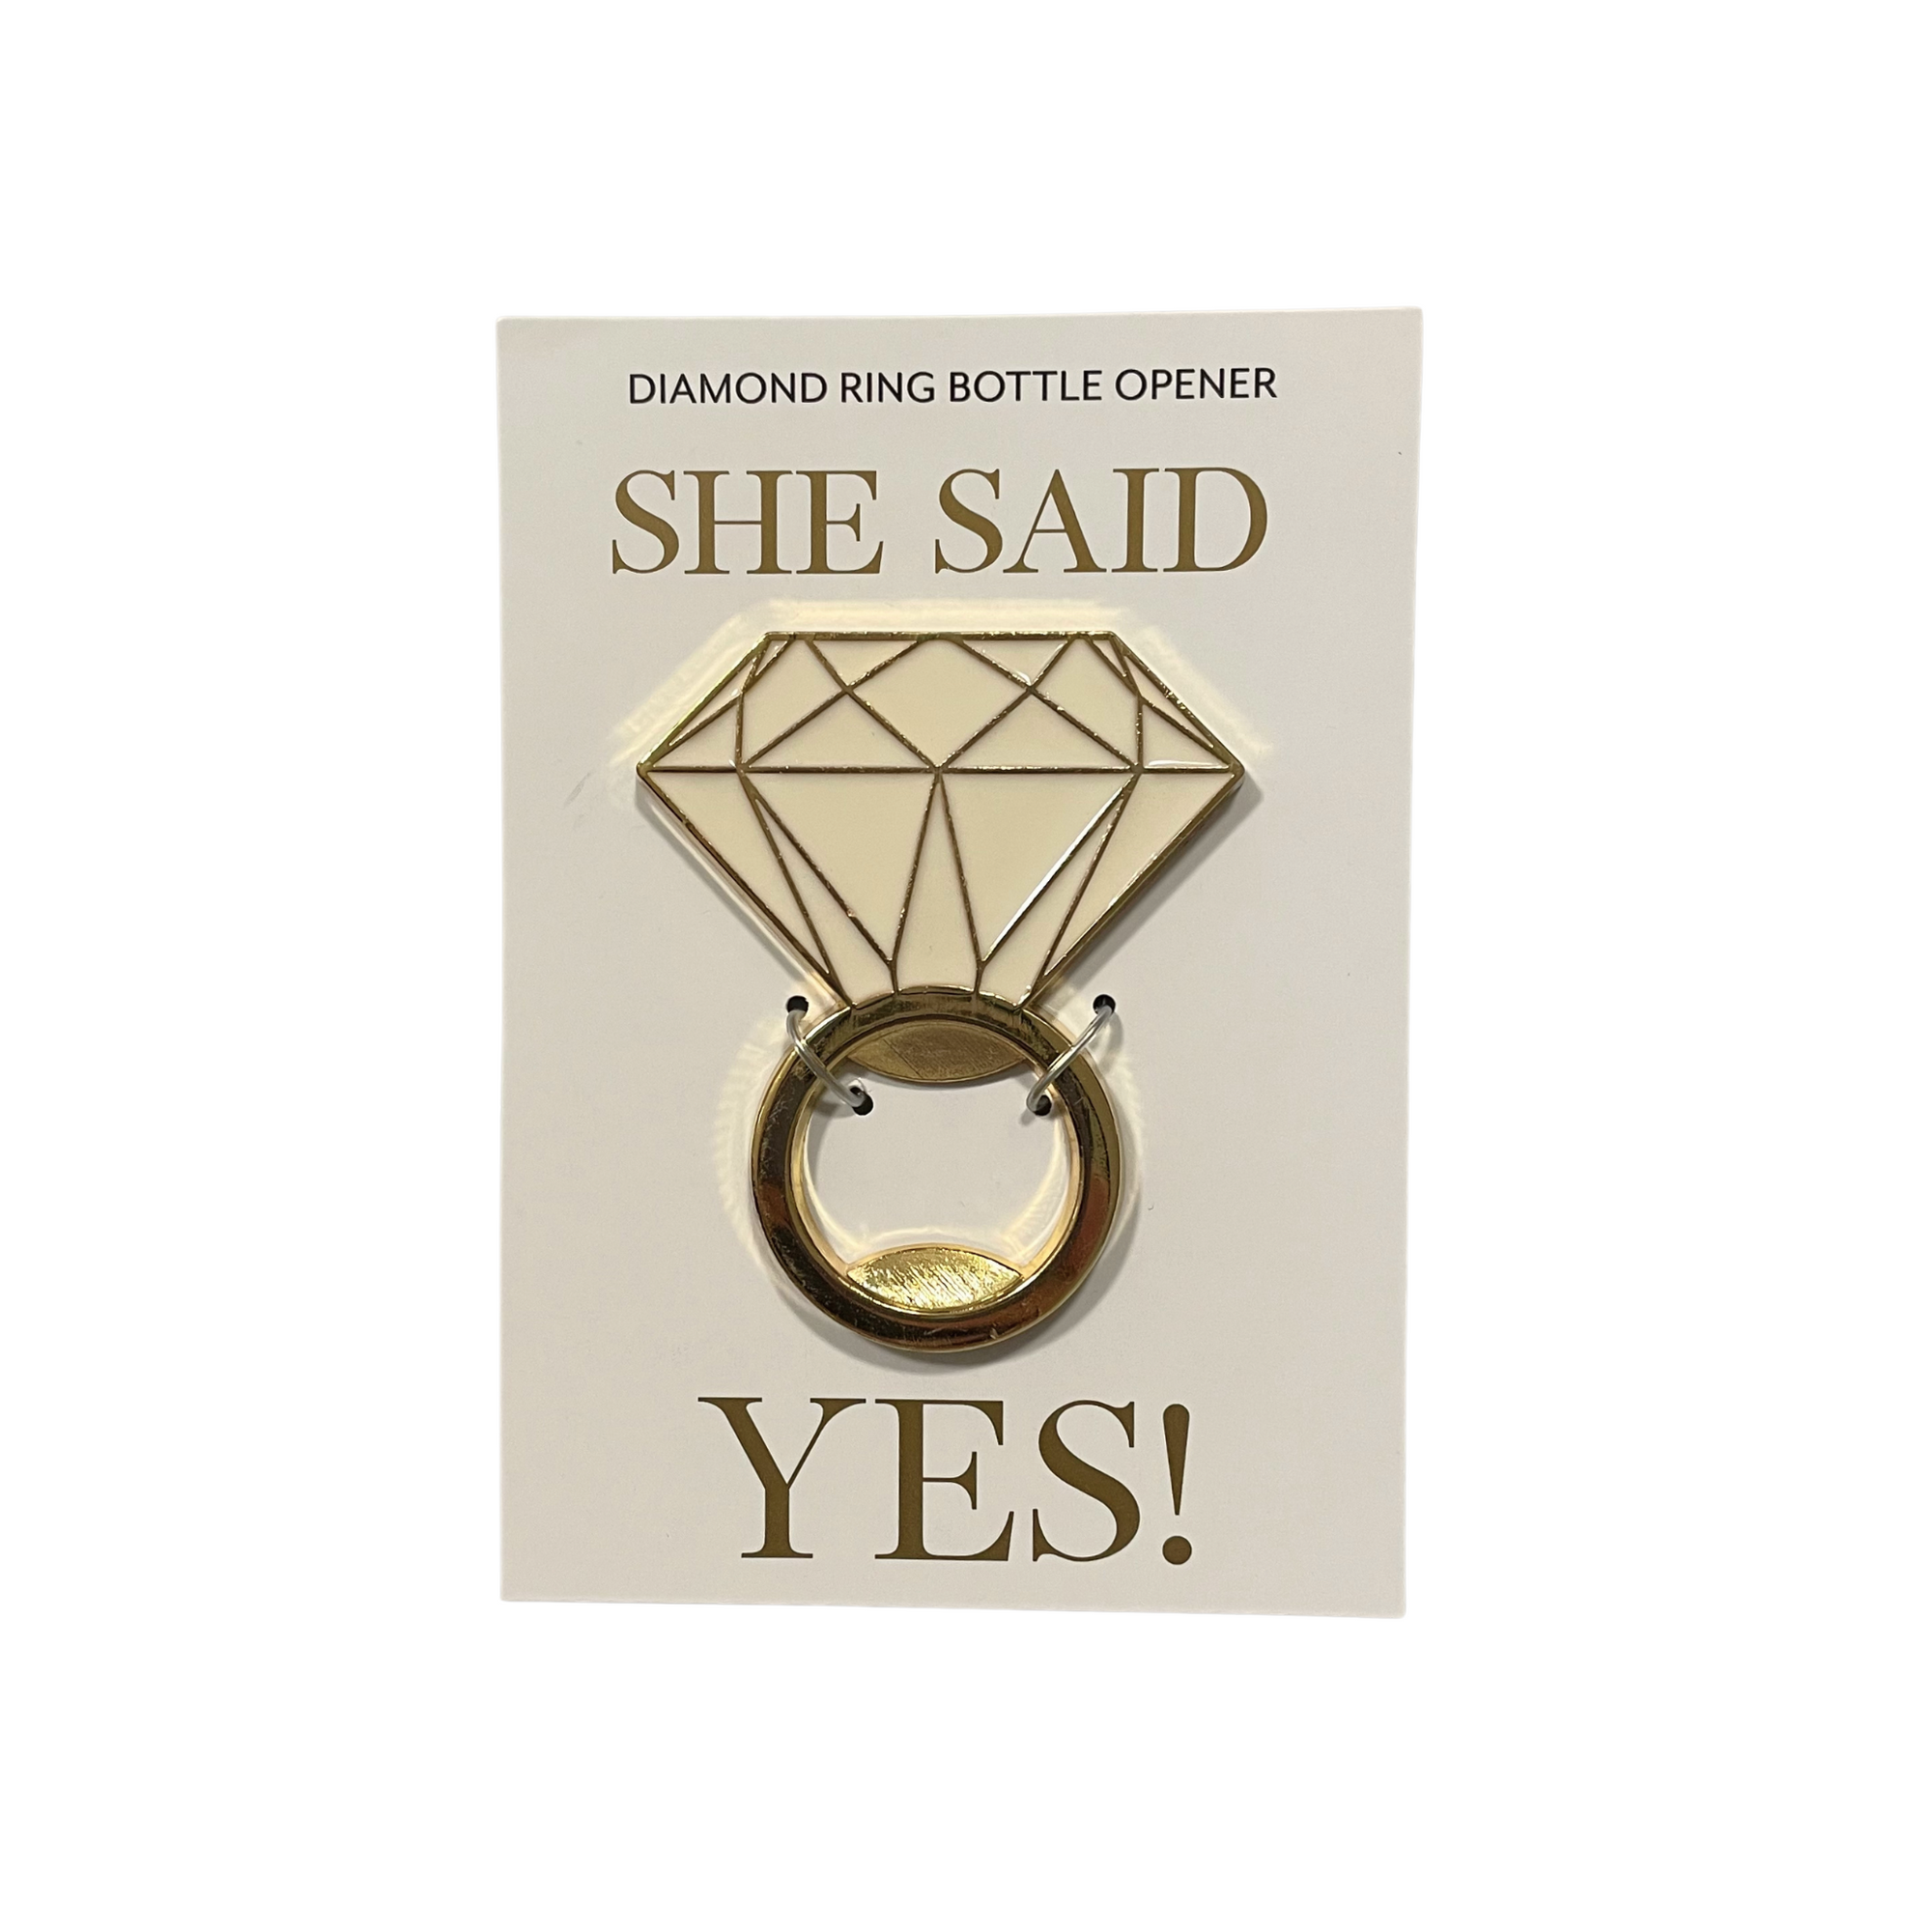 "She Said Yes!" Diamond Ring Bottle Opener